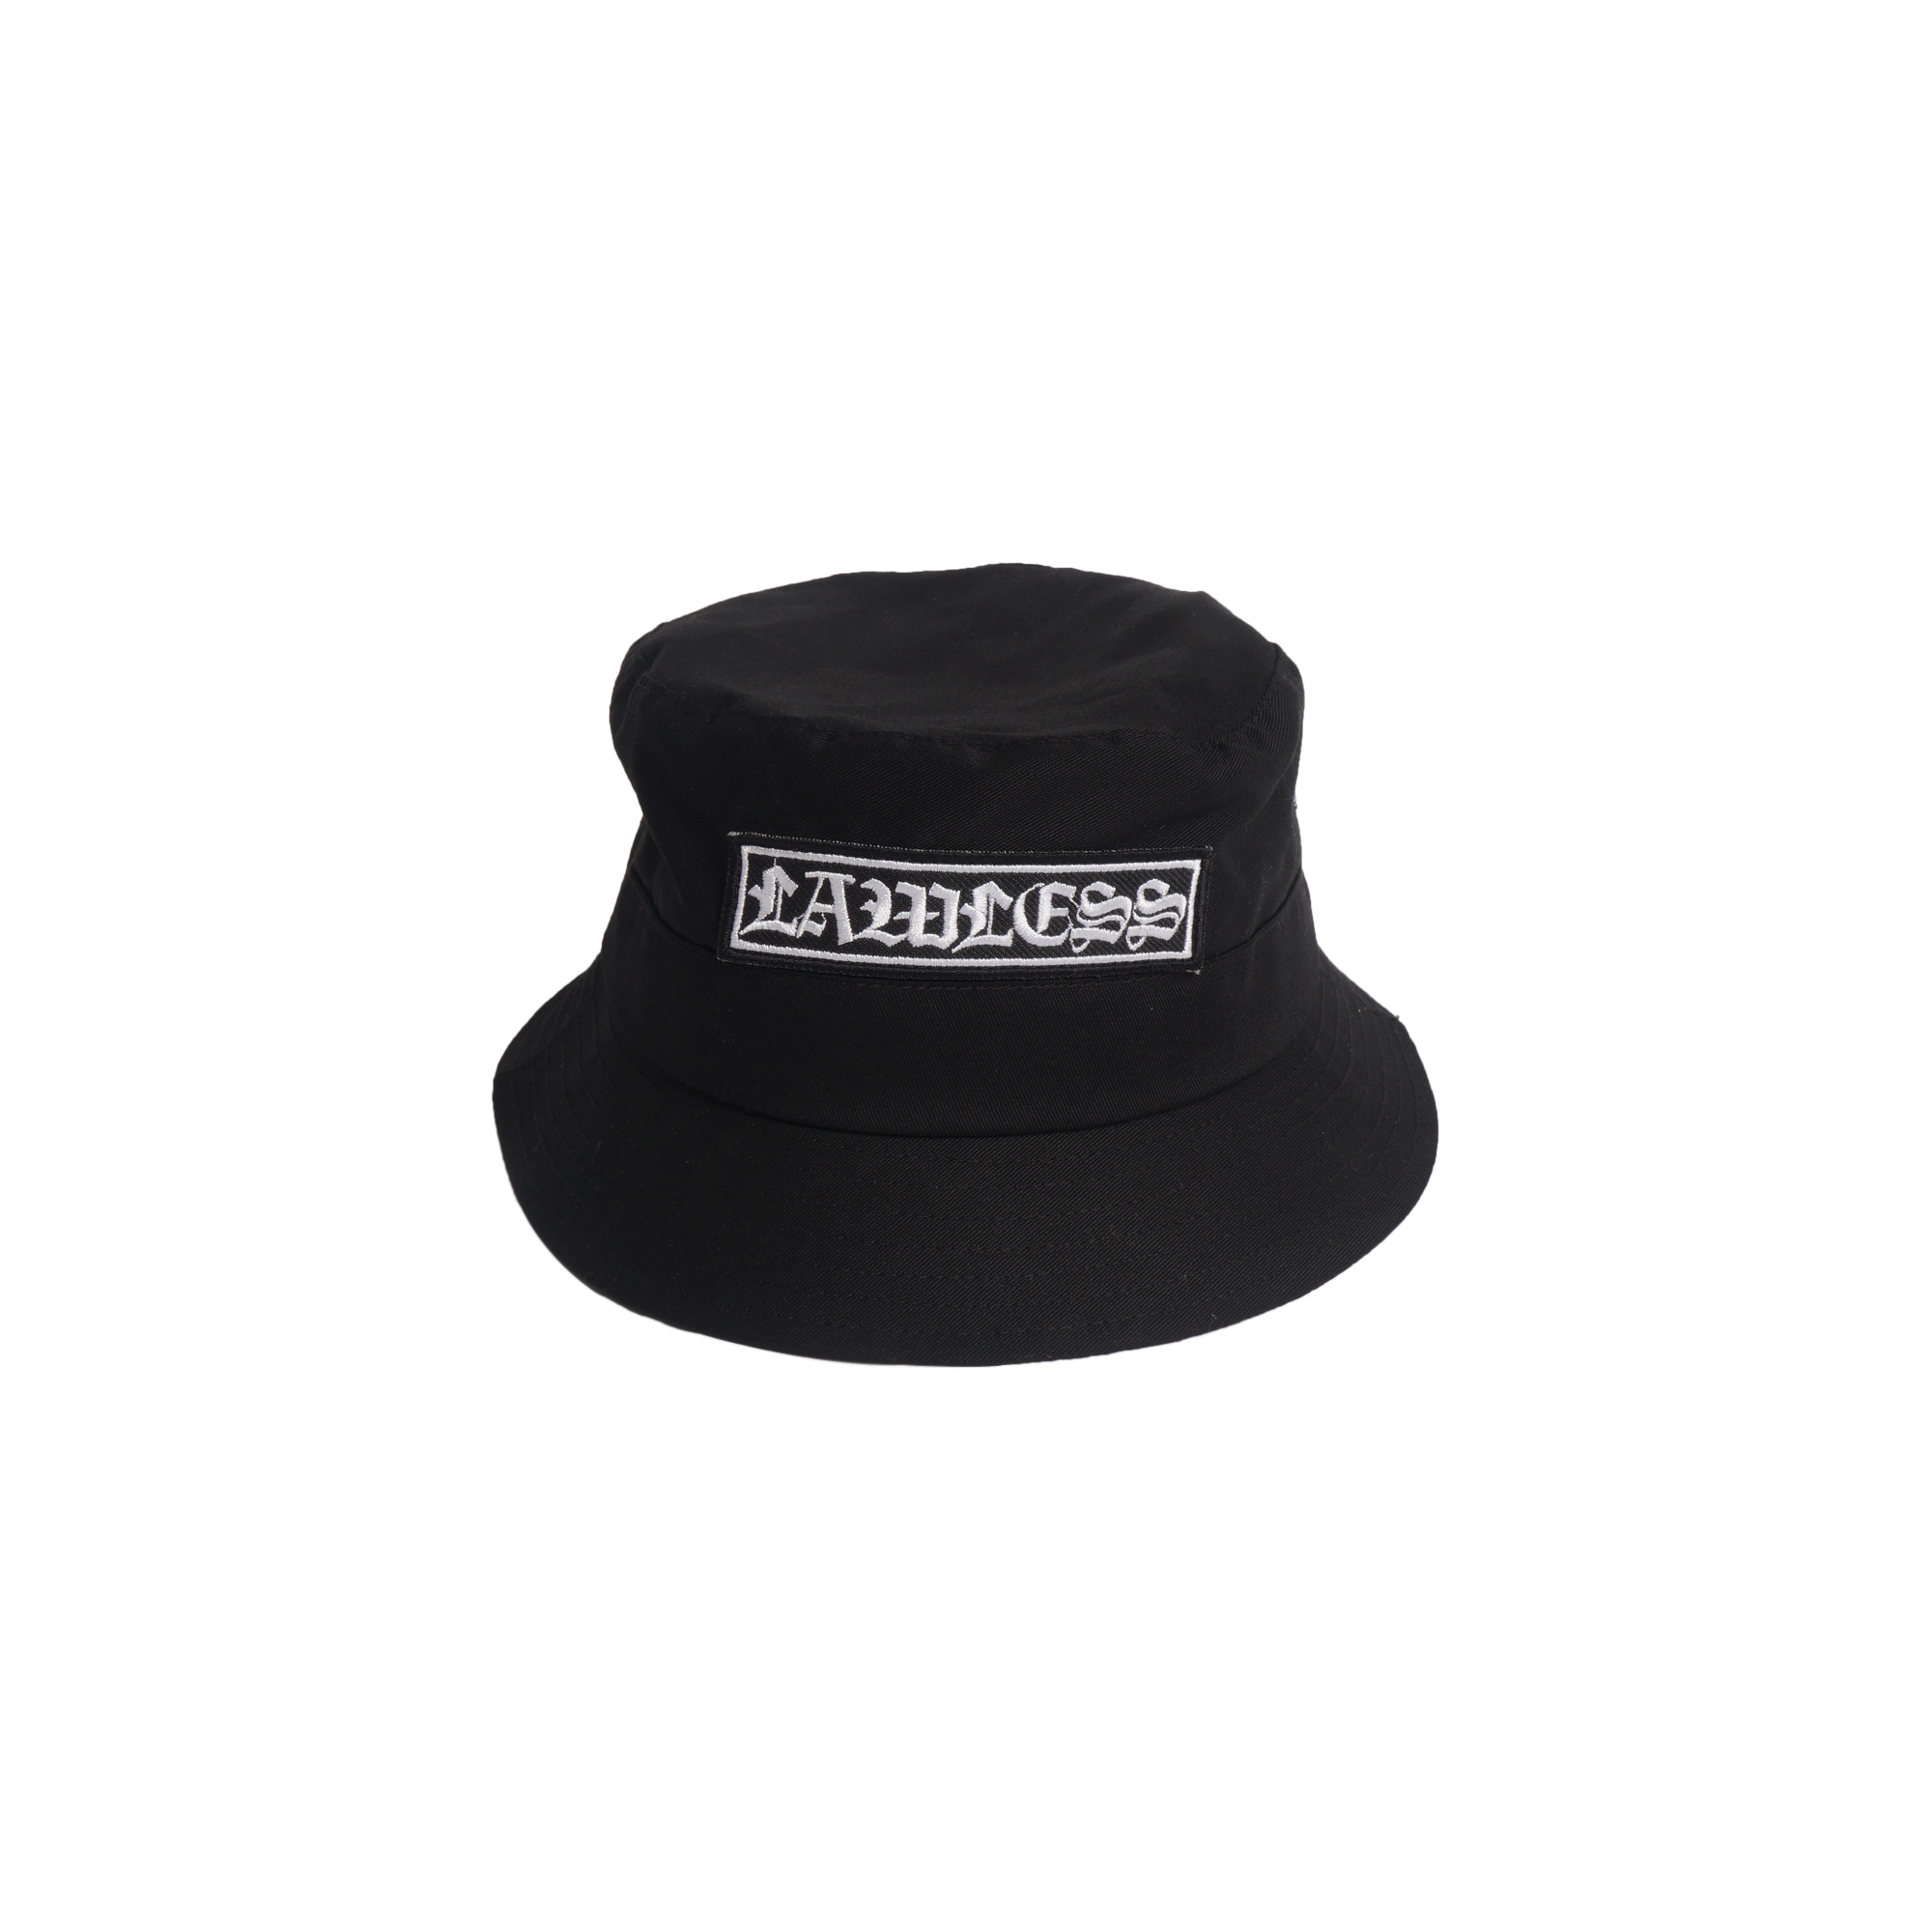 lawless-bucket-hat-black